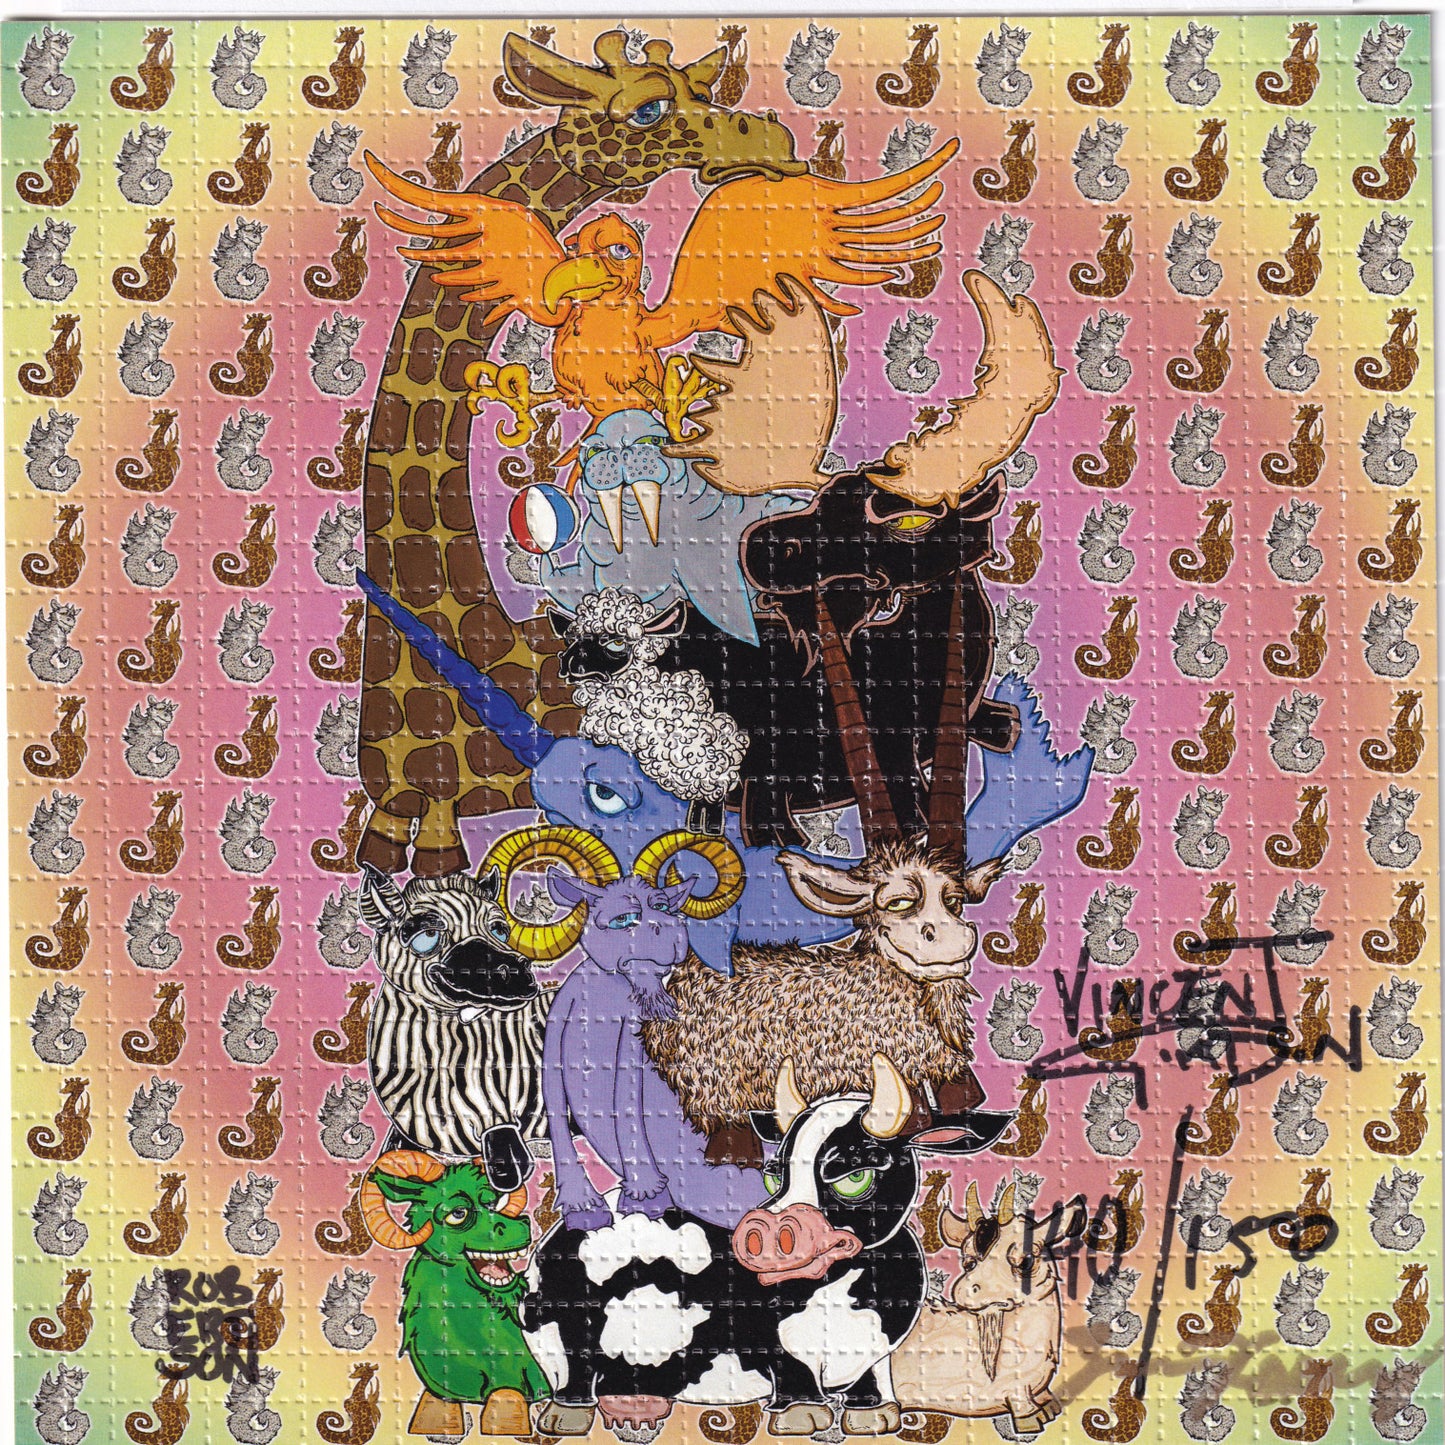 Animals by Vincent Gordon SIGNED Limited Edition LSD blotter art print